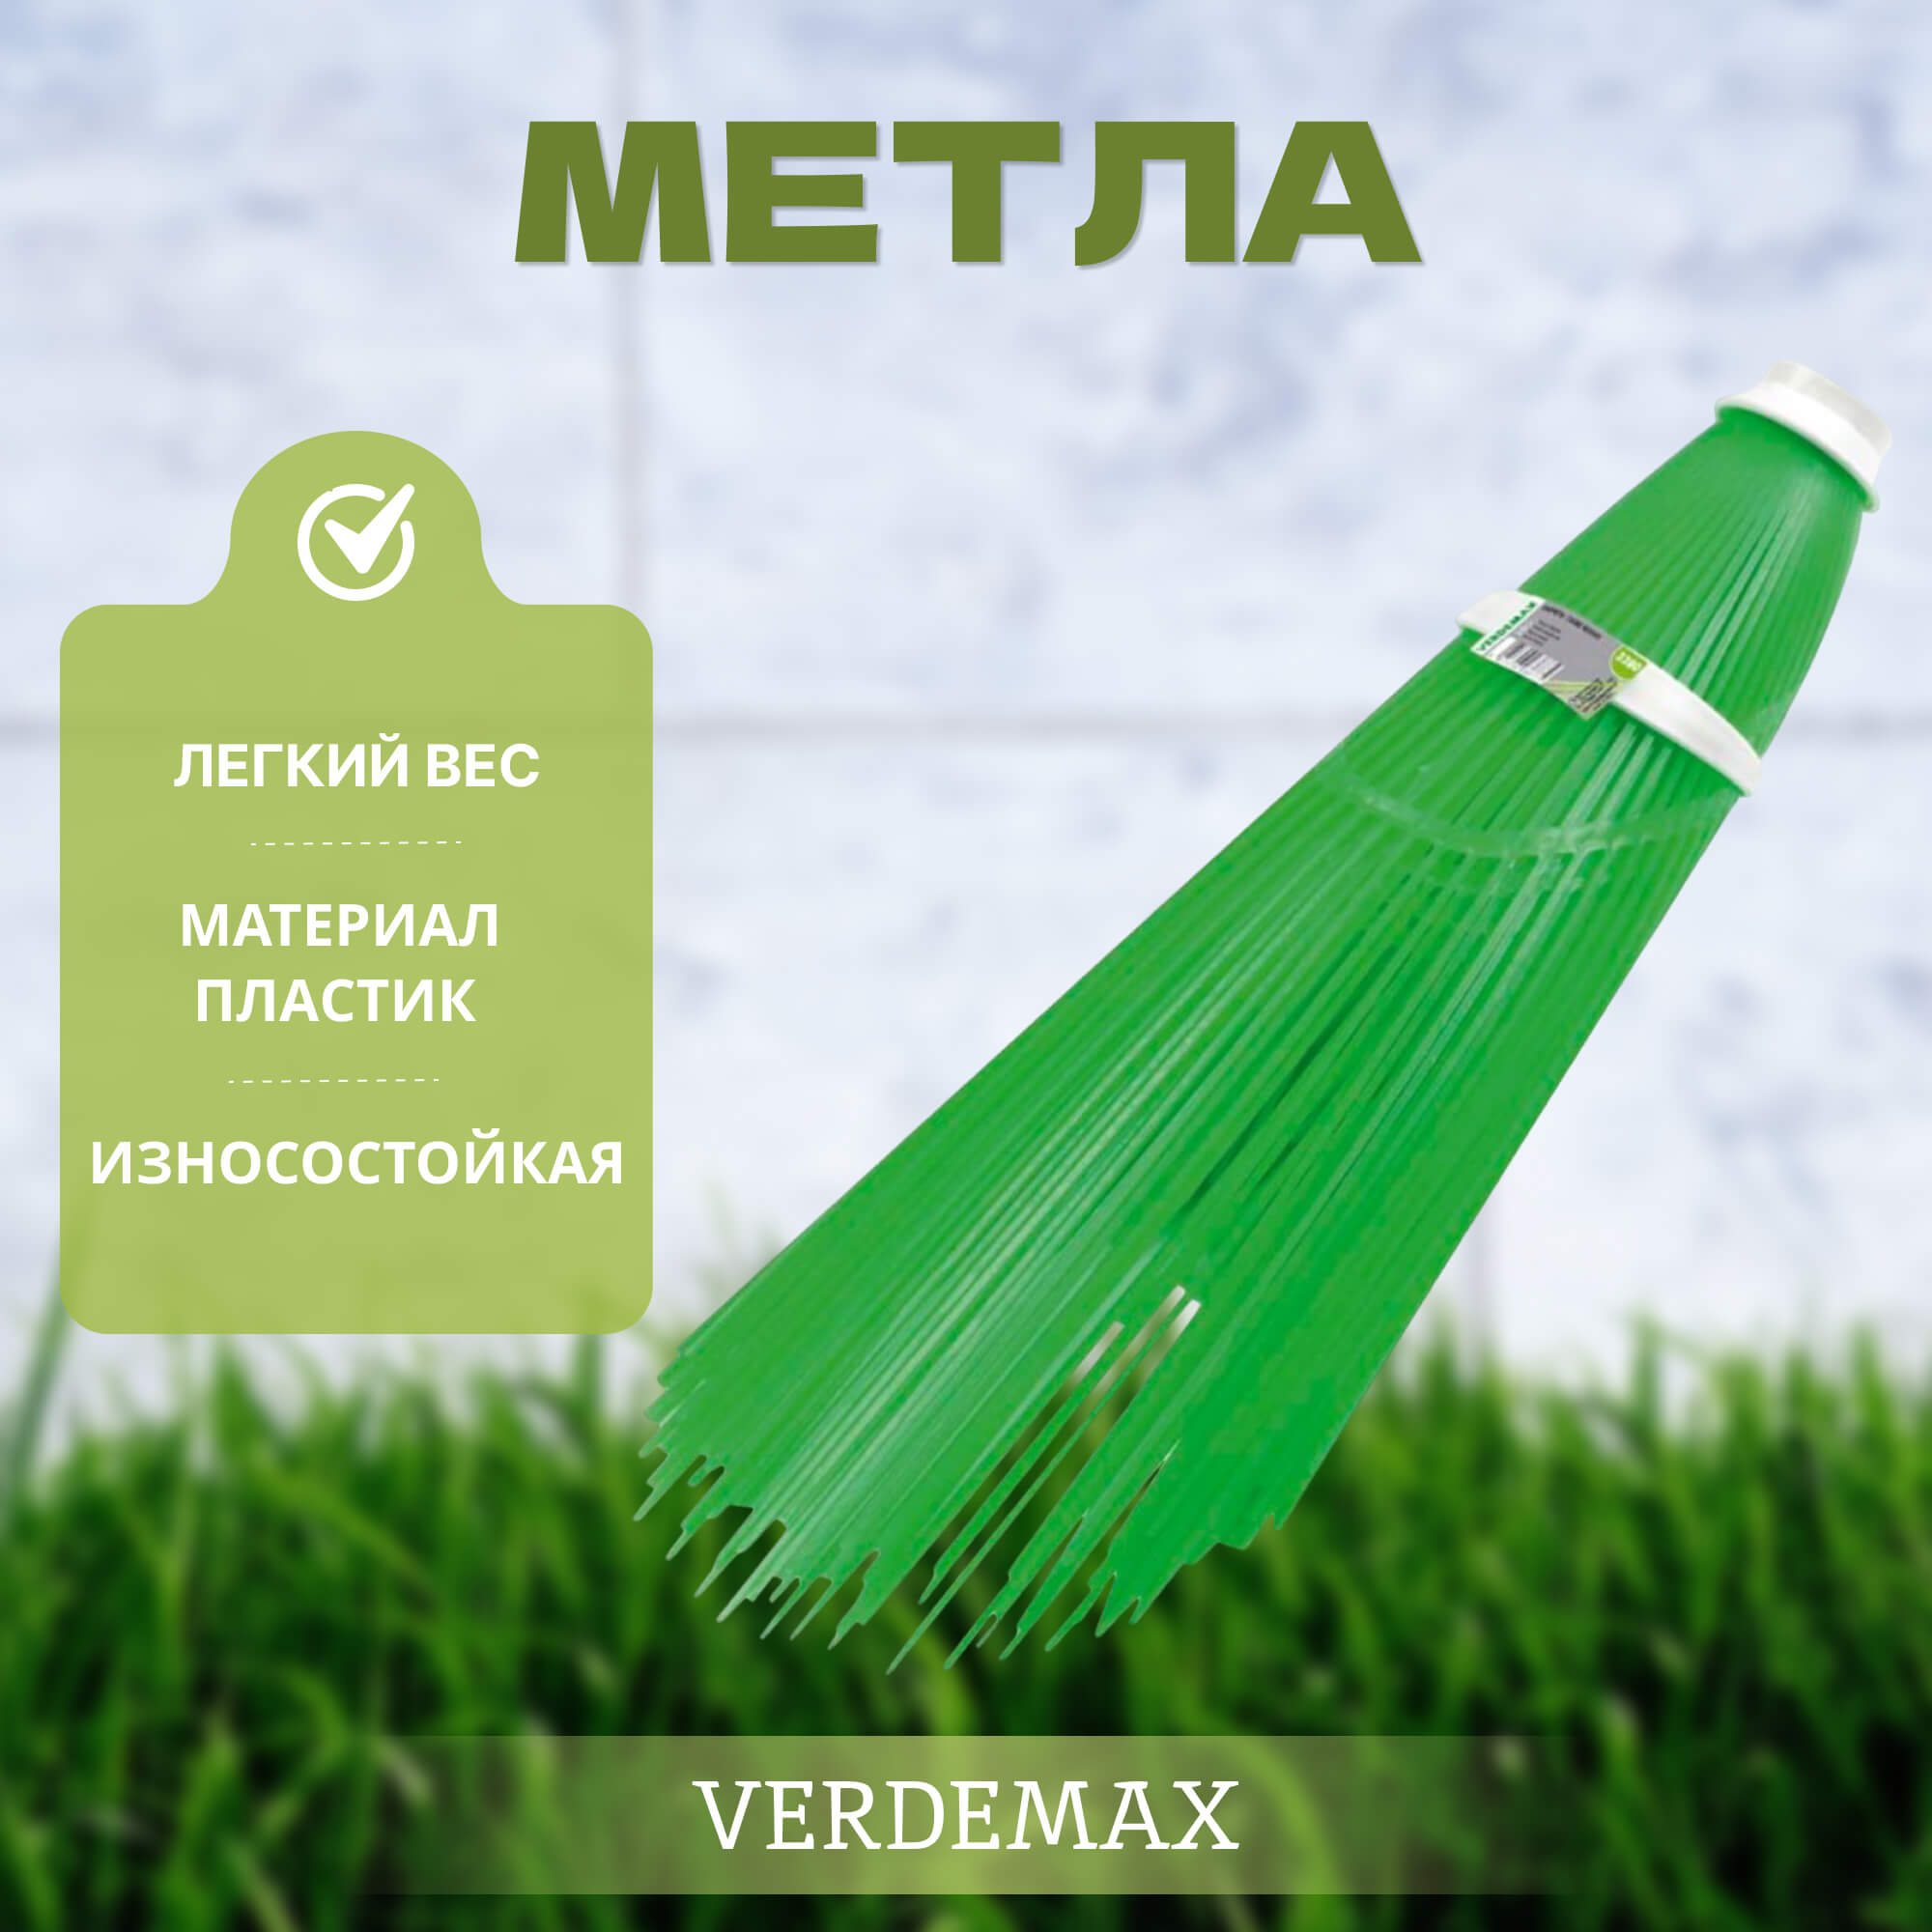 Метла пластик Verdemax - фото 2